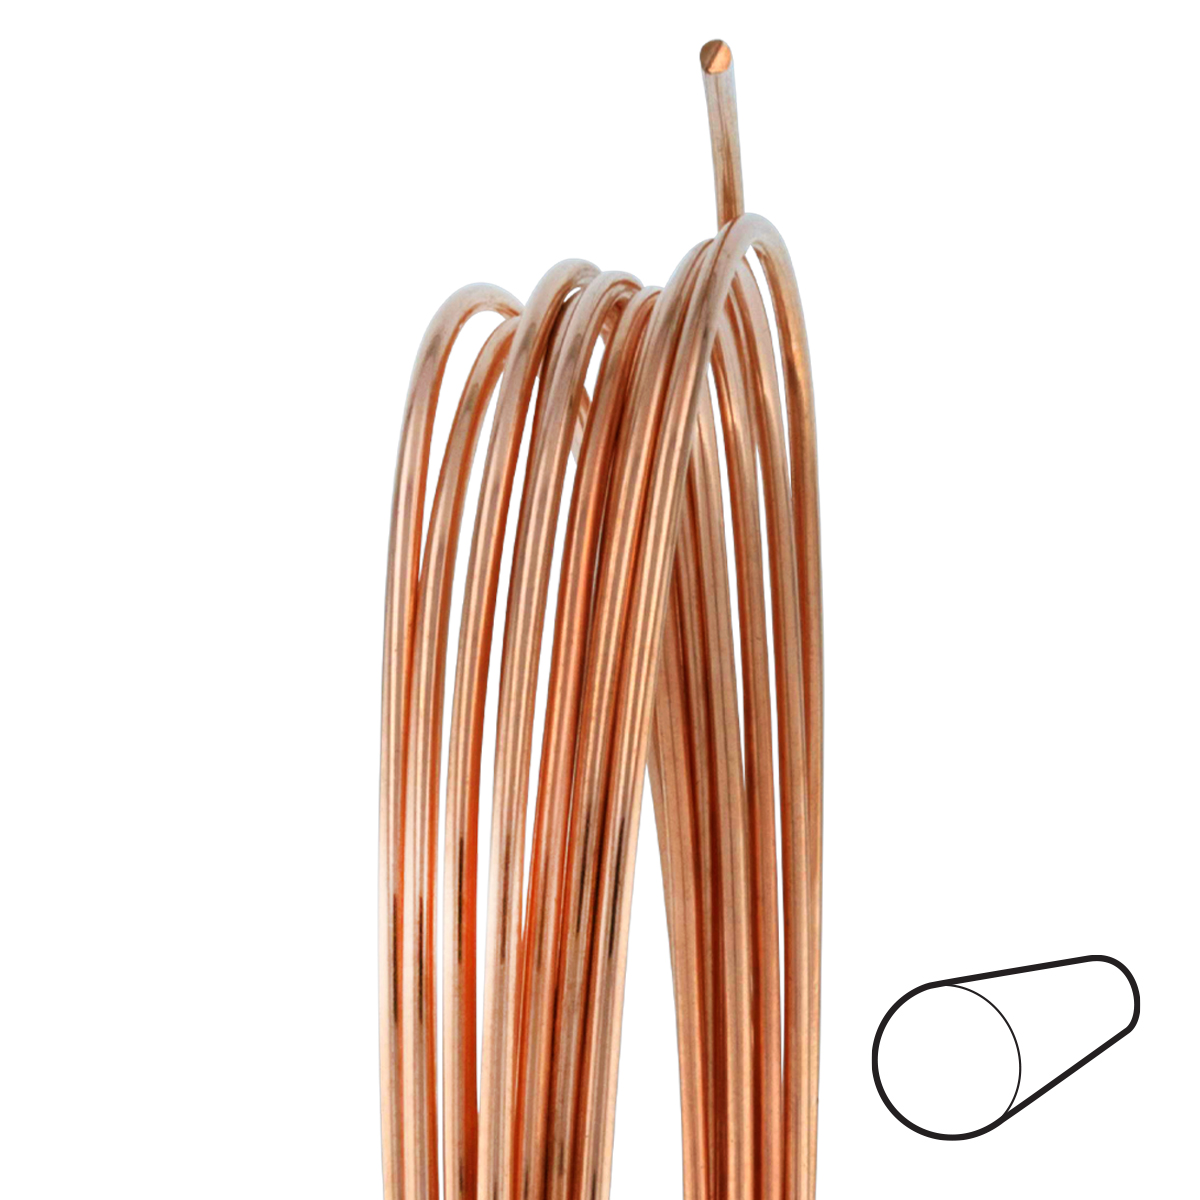 JewelrySupply Copper Dead Soft Wire Round 20 Gauge (20 Foot)